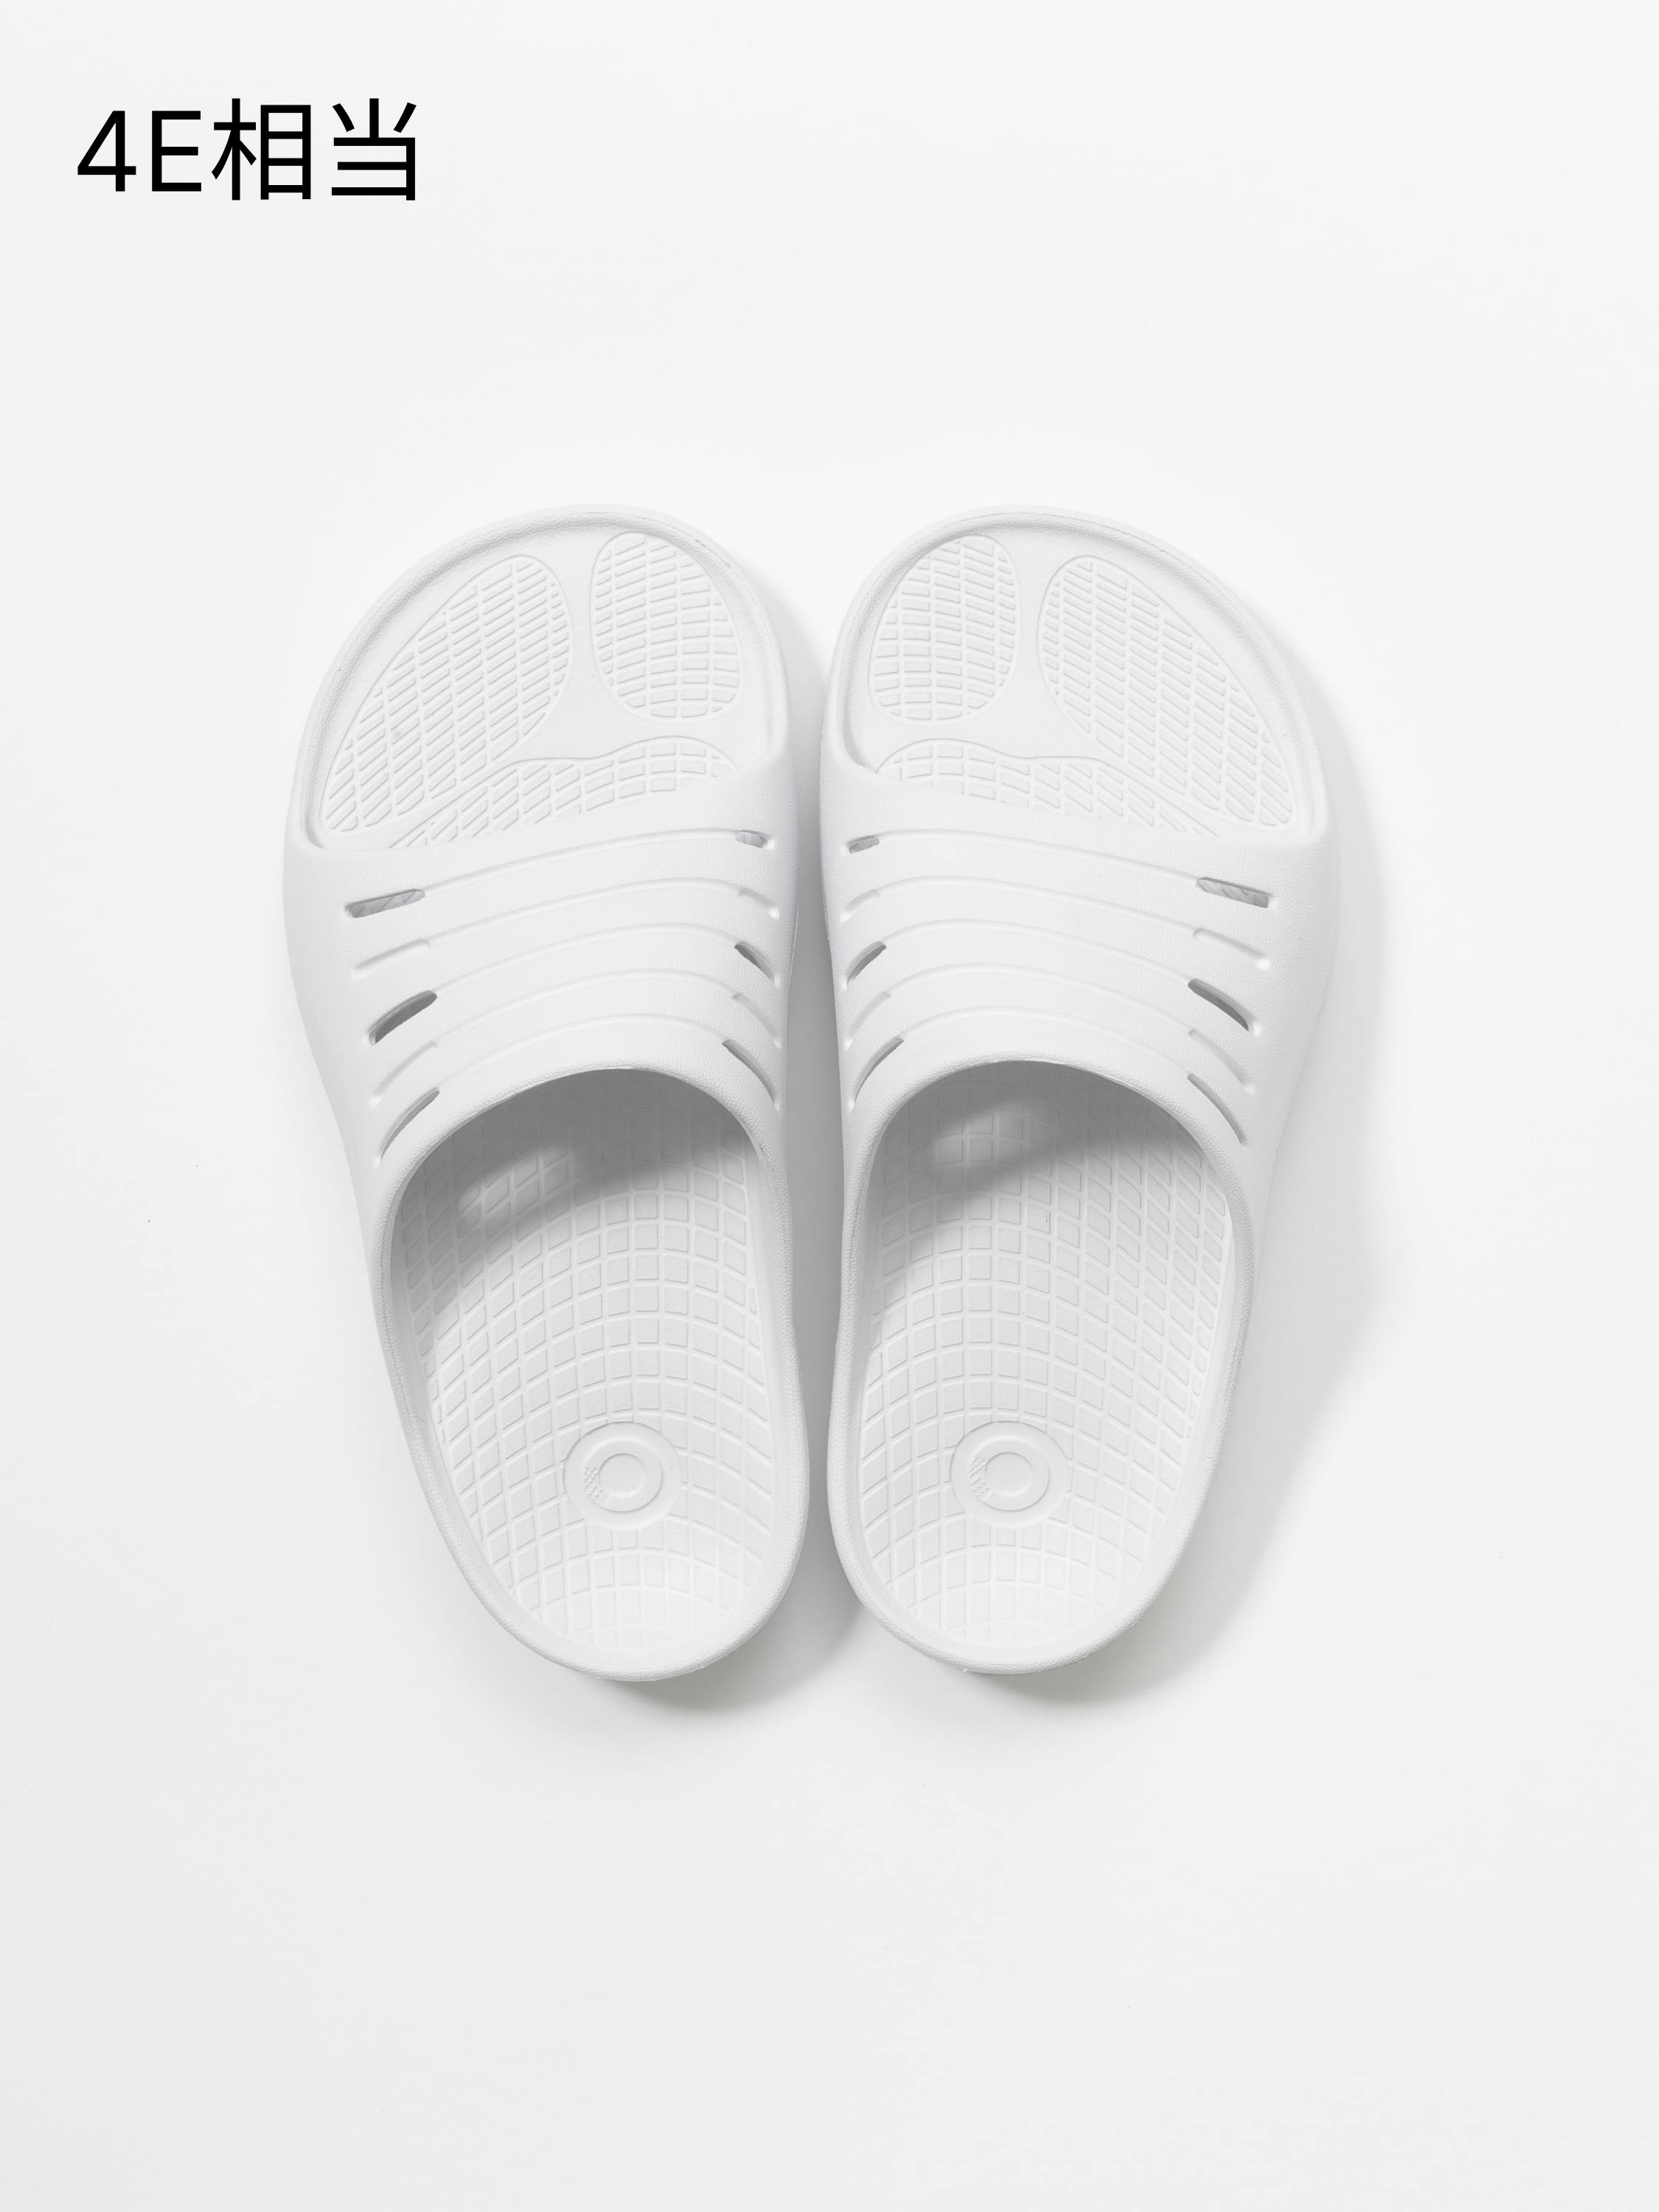 Conditioning Sandal Slide | TENTIAL[テンシャル] 公式オンラインストア